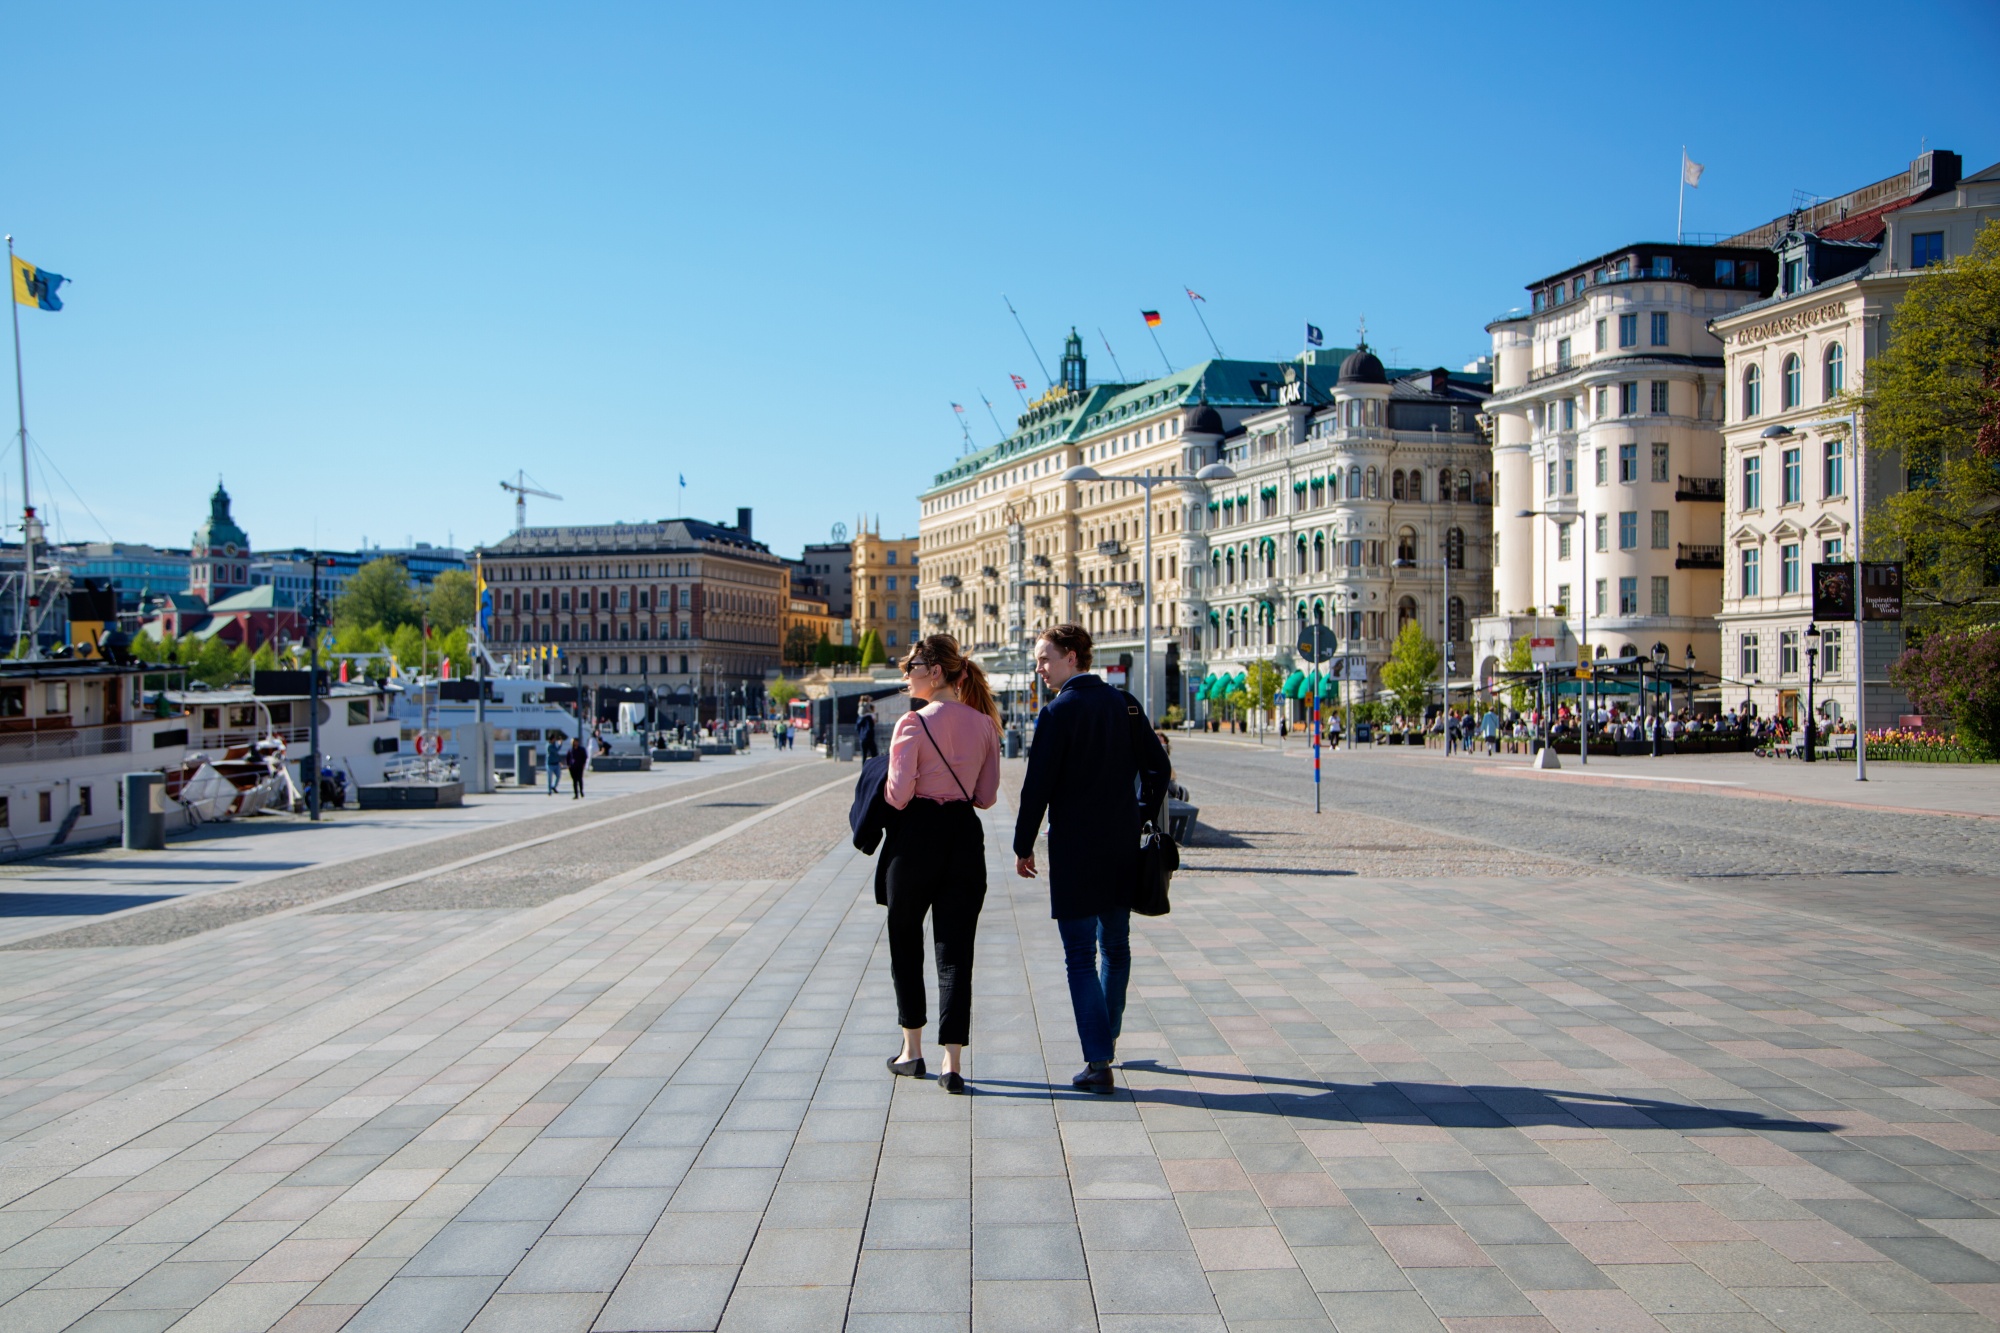 Pedestrians walk near the habour in Stockholm.